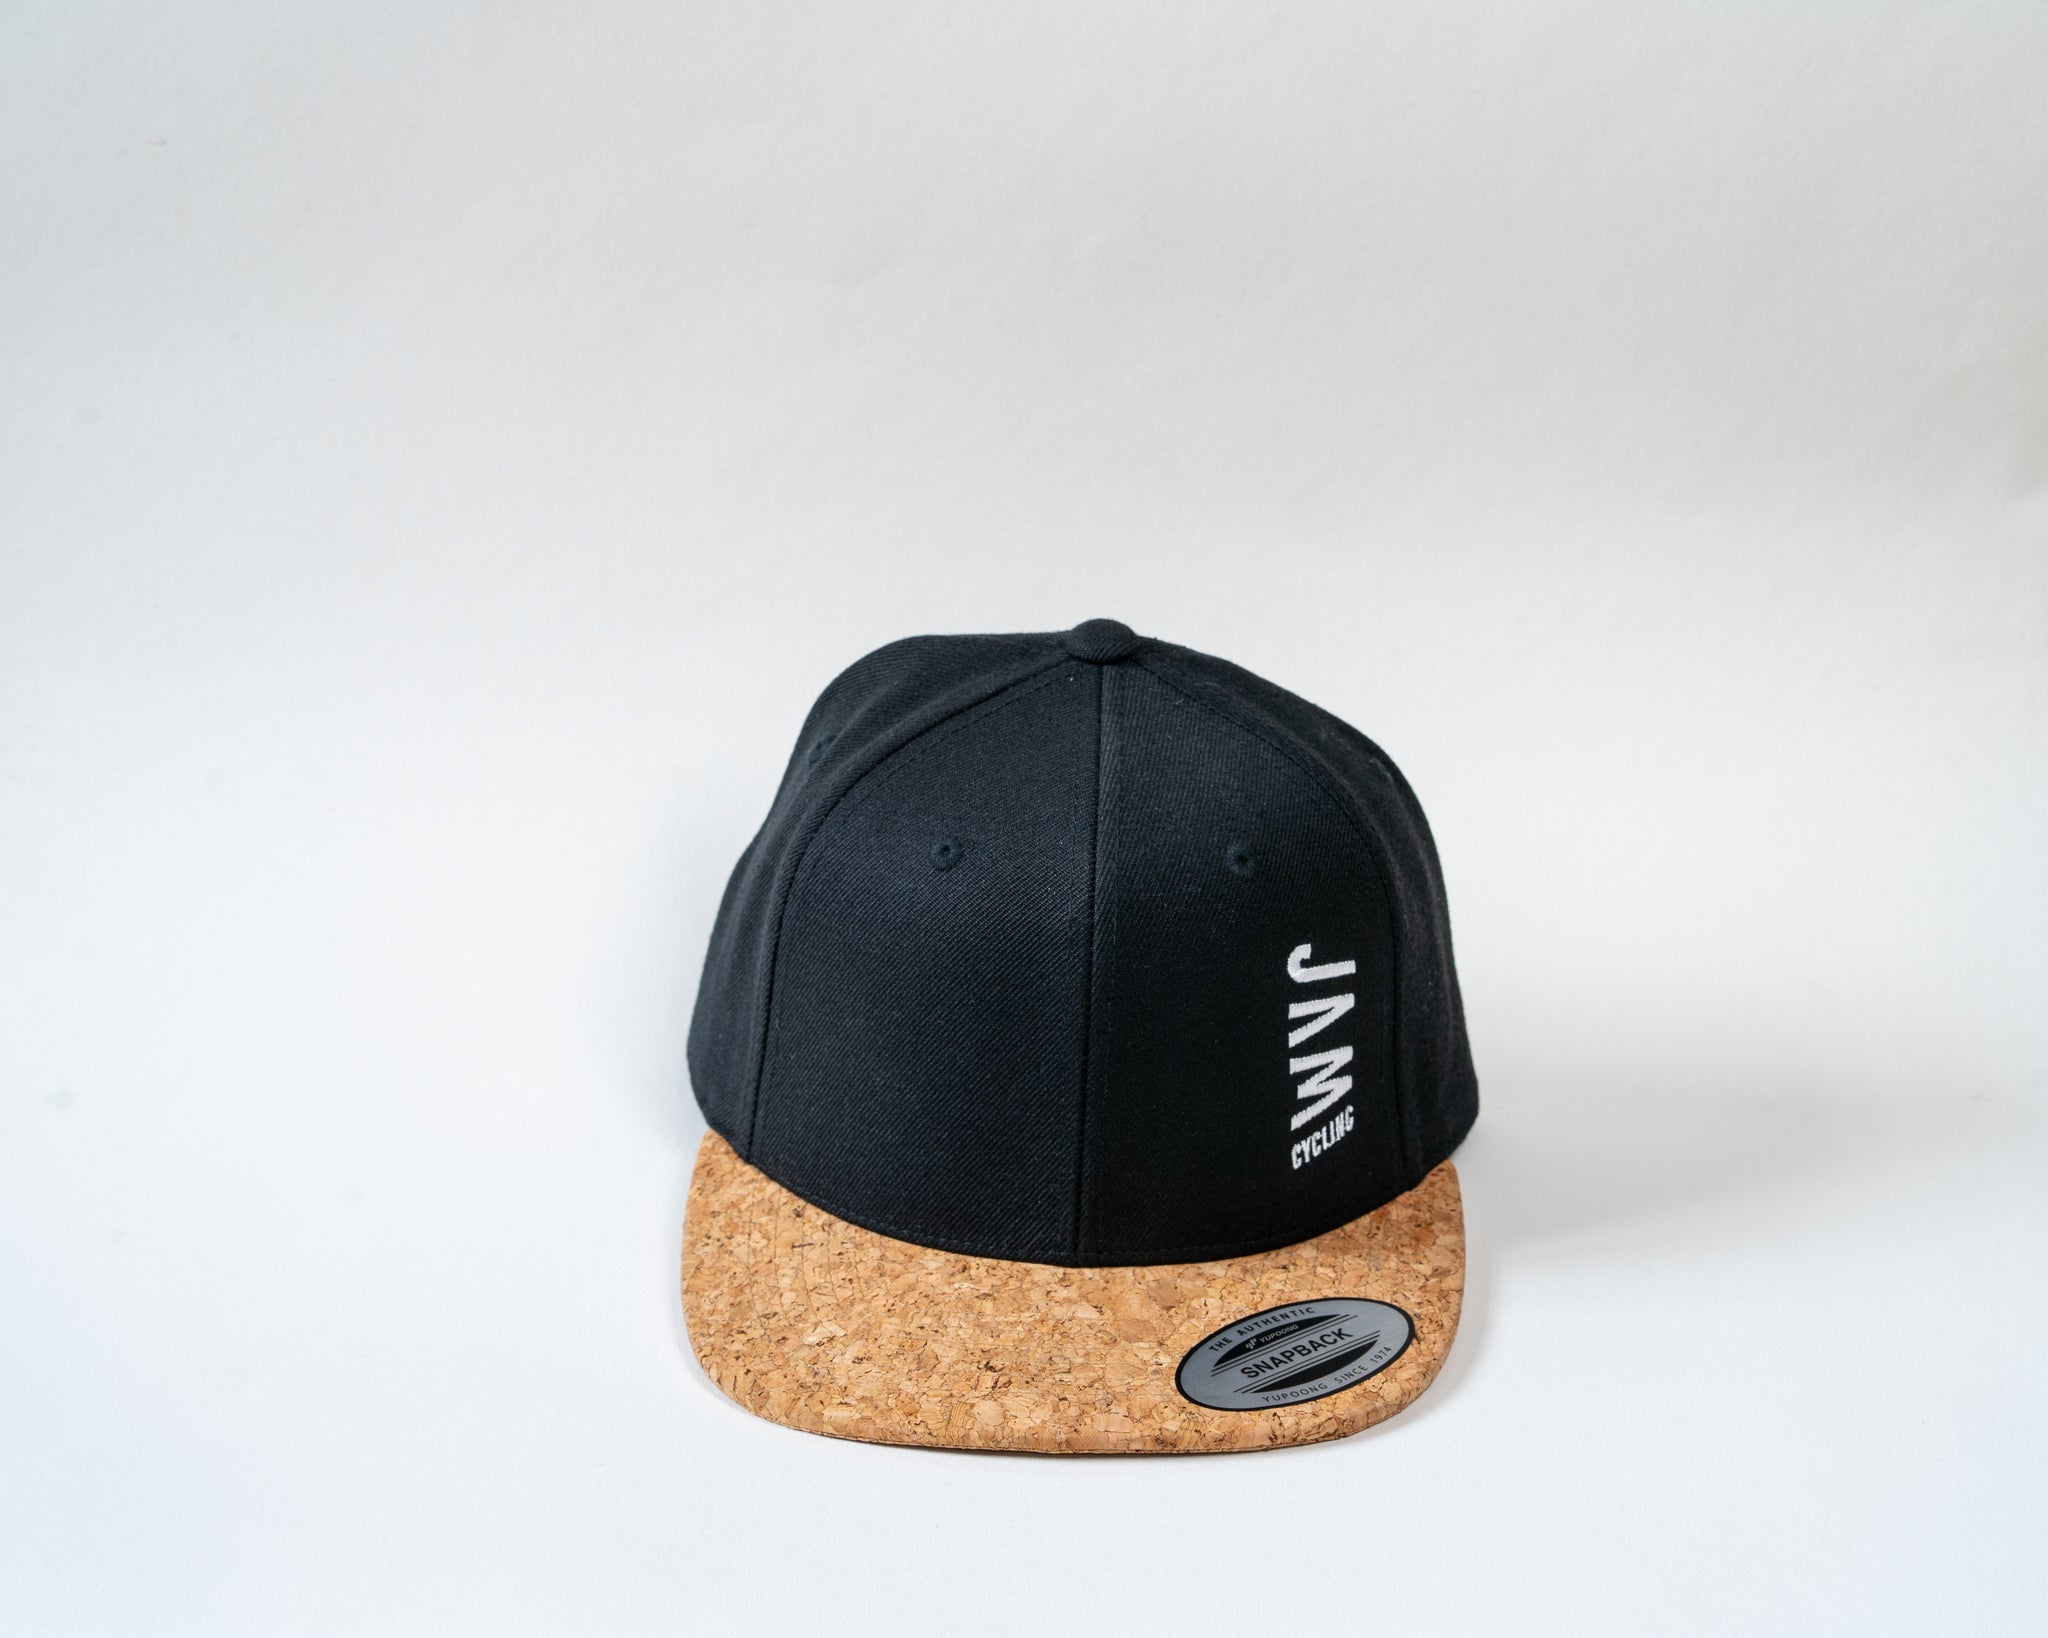 JAM snap back cap featuring cork peak stitched JAM logo floating on a white background